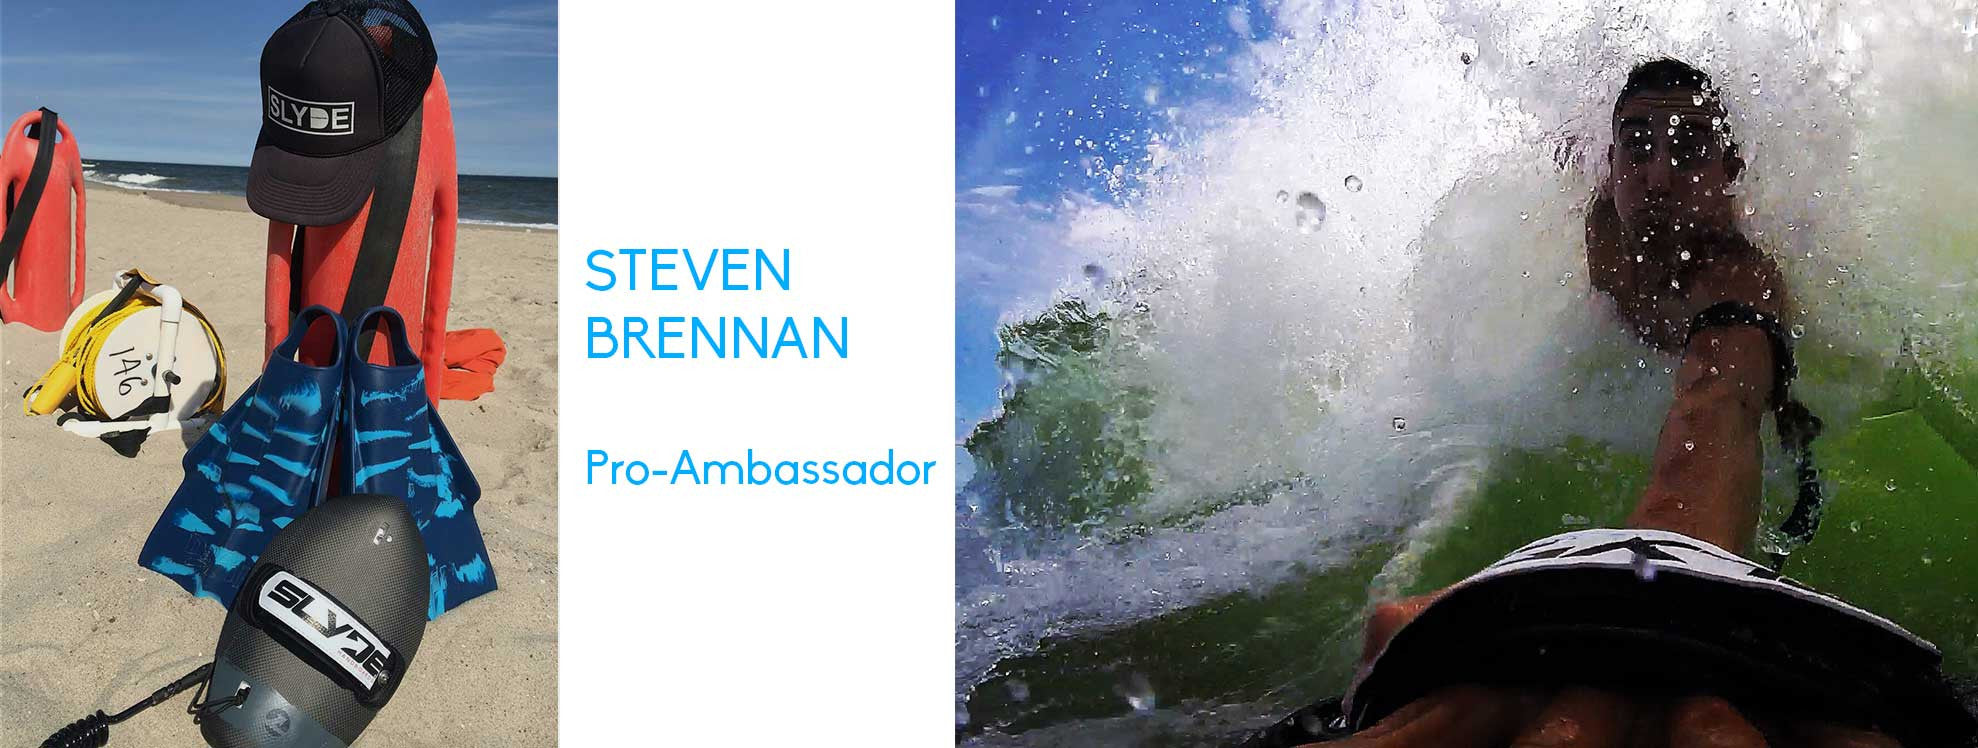 Slyde Exclusive Interview: NYC Pro-Ambassador Steven Brennan